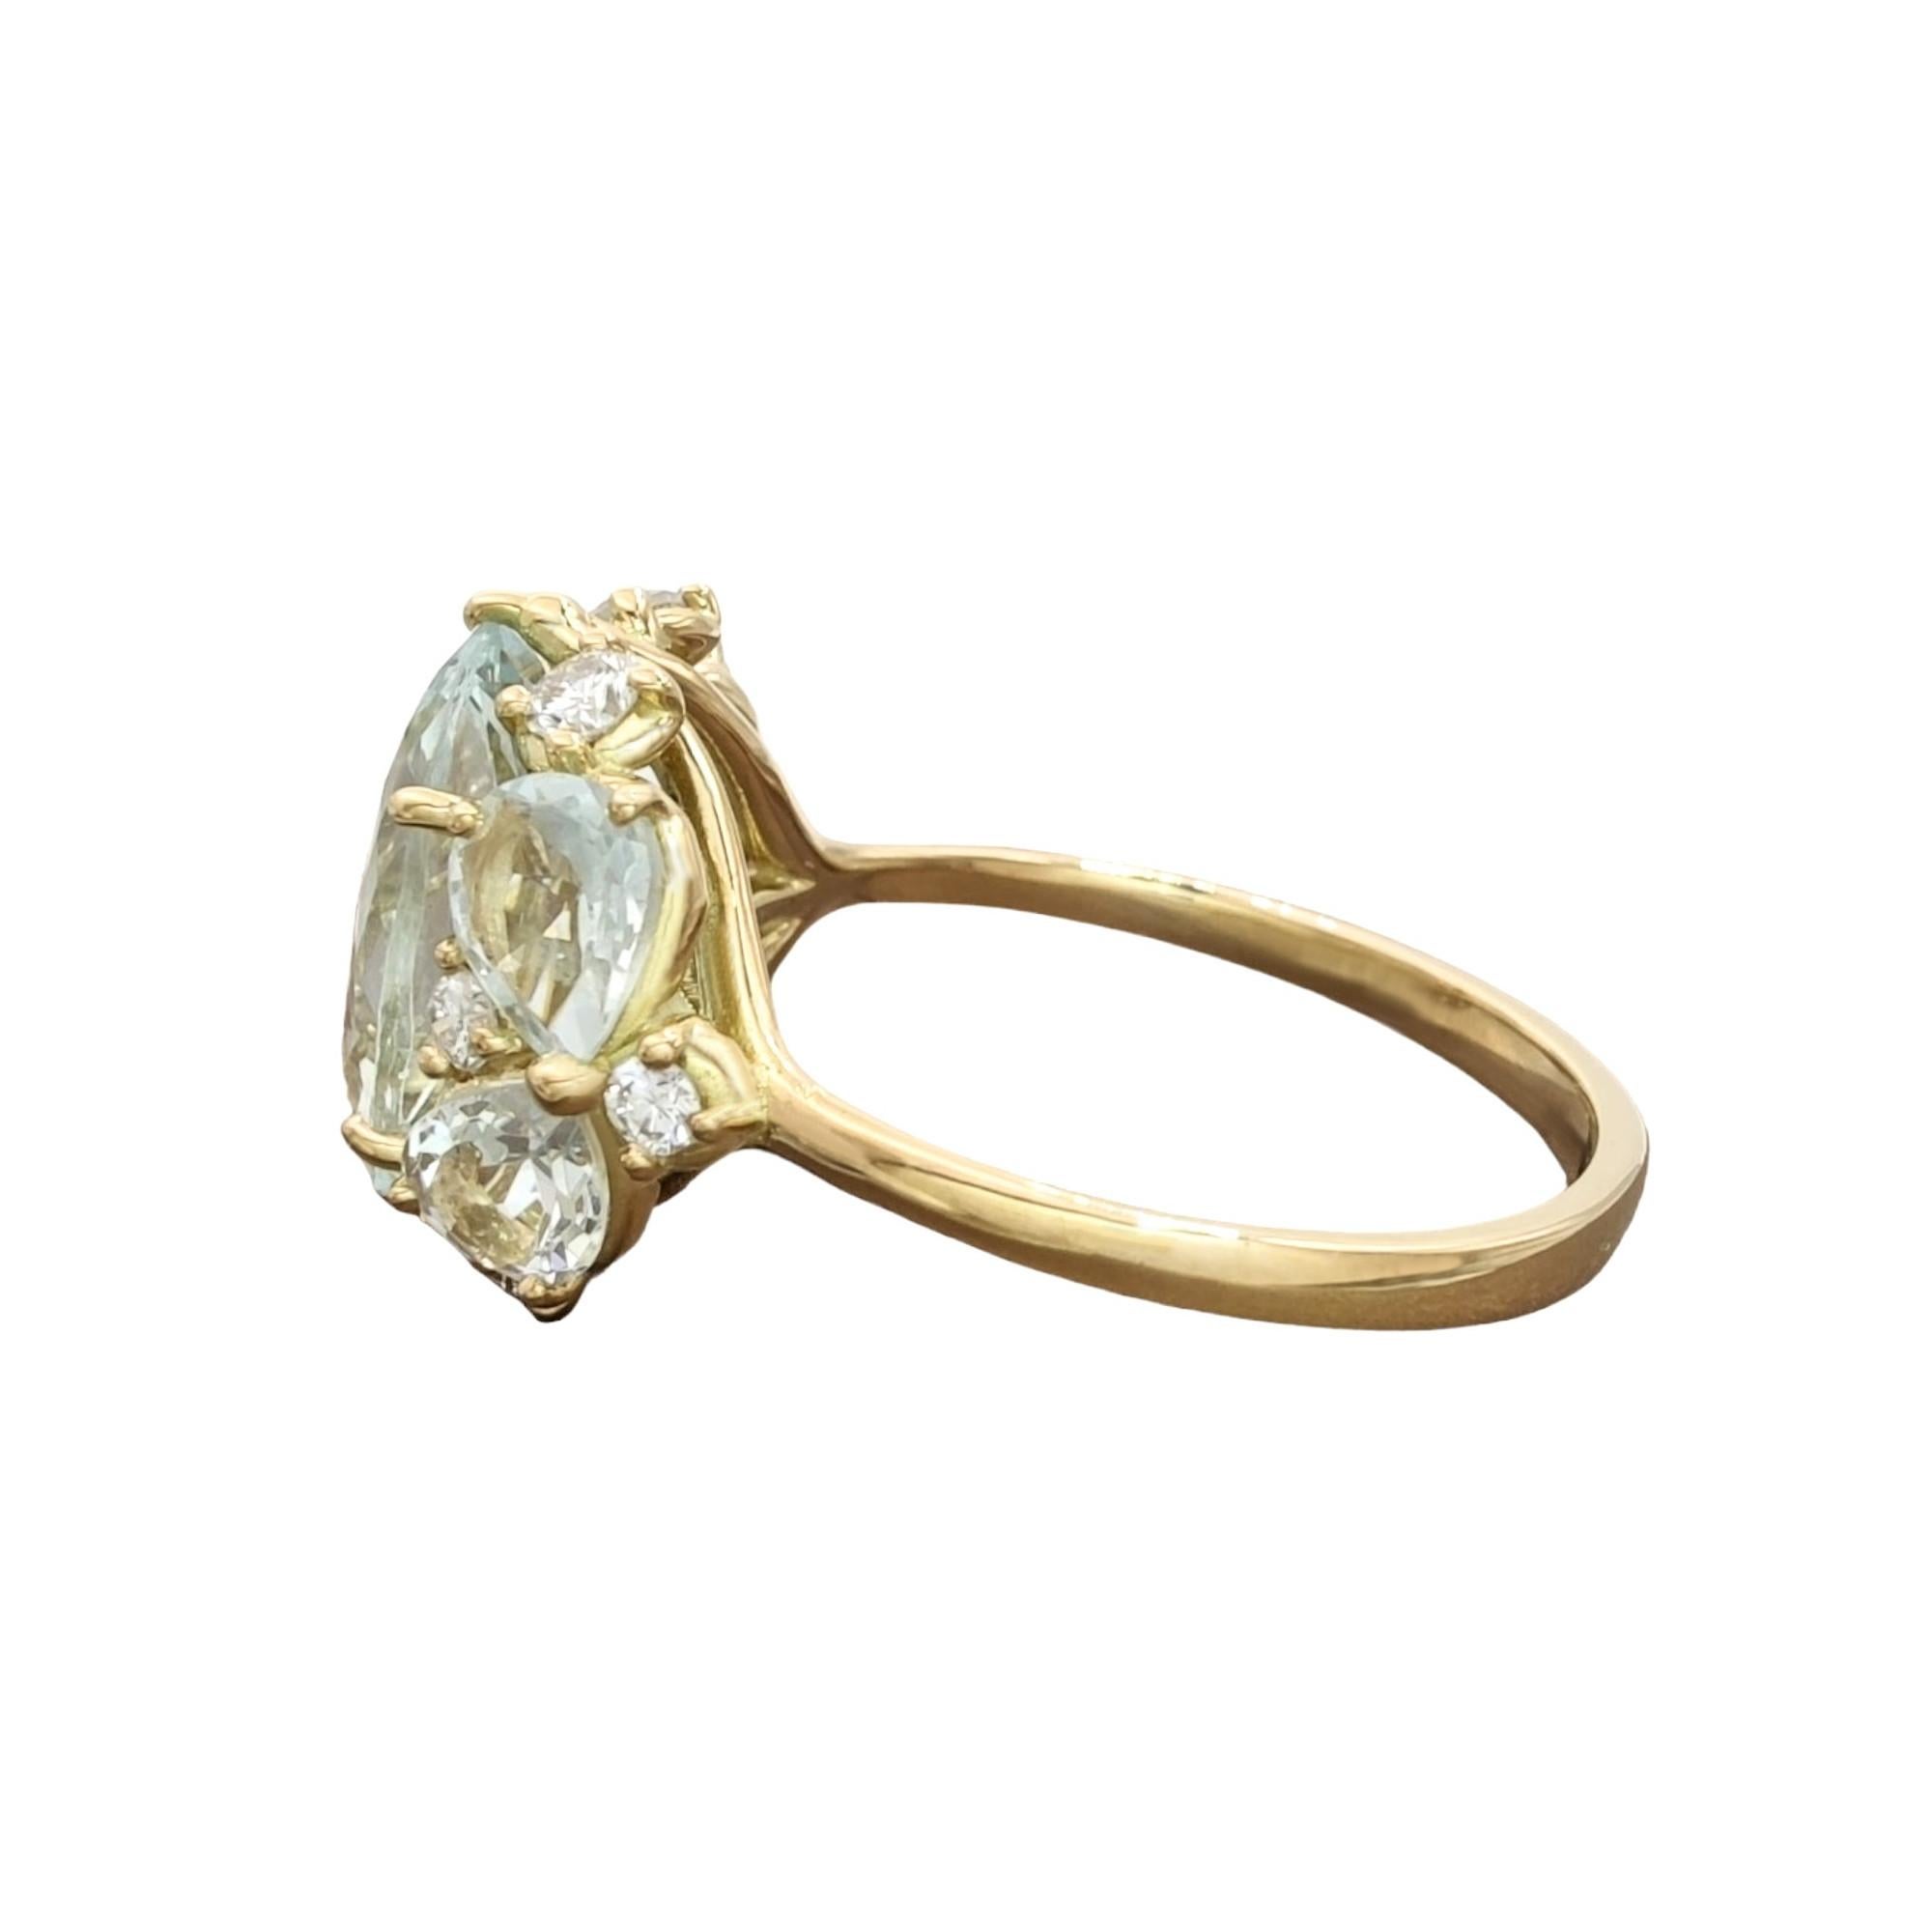 2, 69ct Oval Cut Aquamarine Engagement Ring, 18k Yellow Gold, Resizable 4